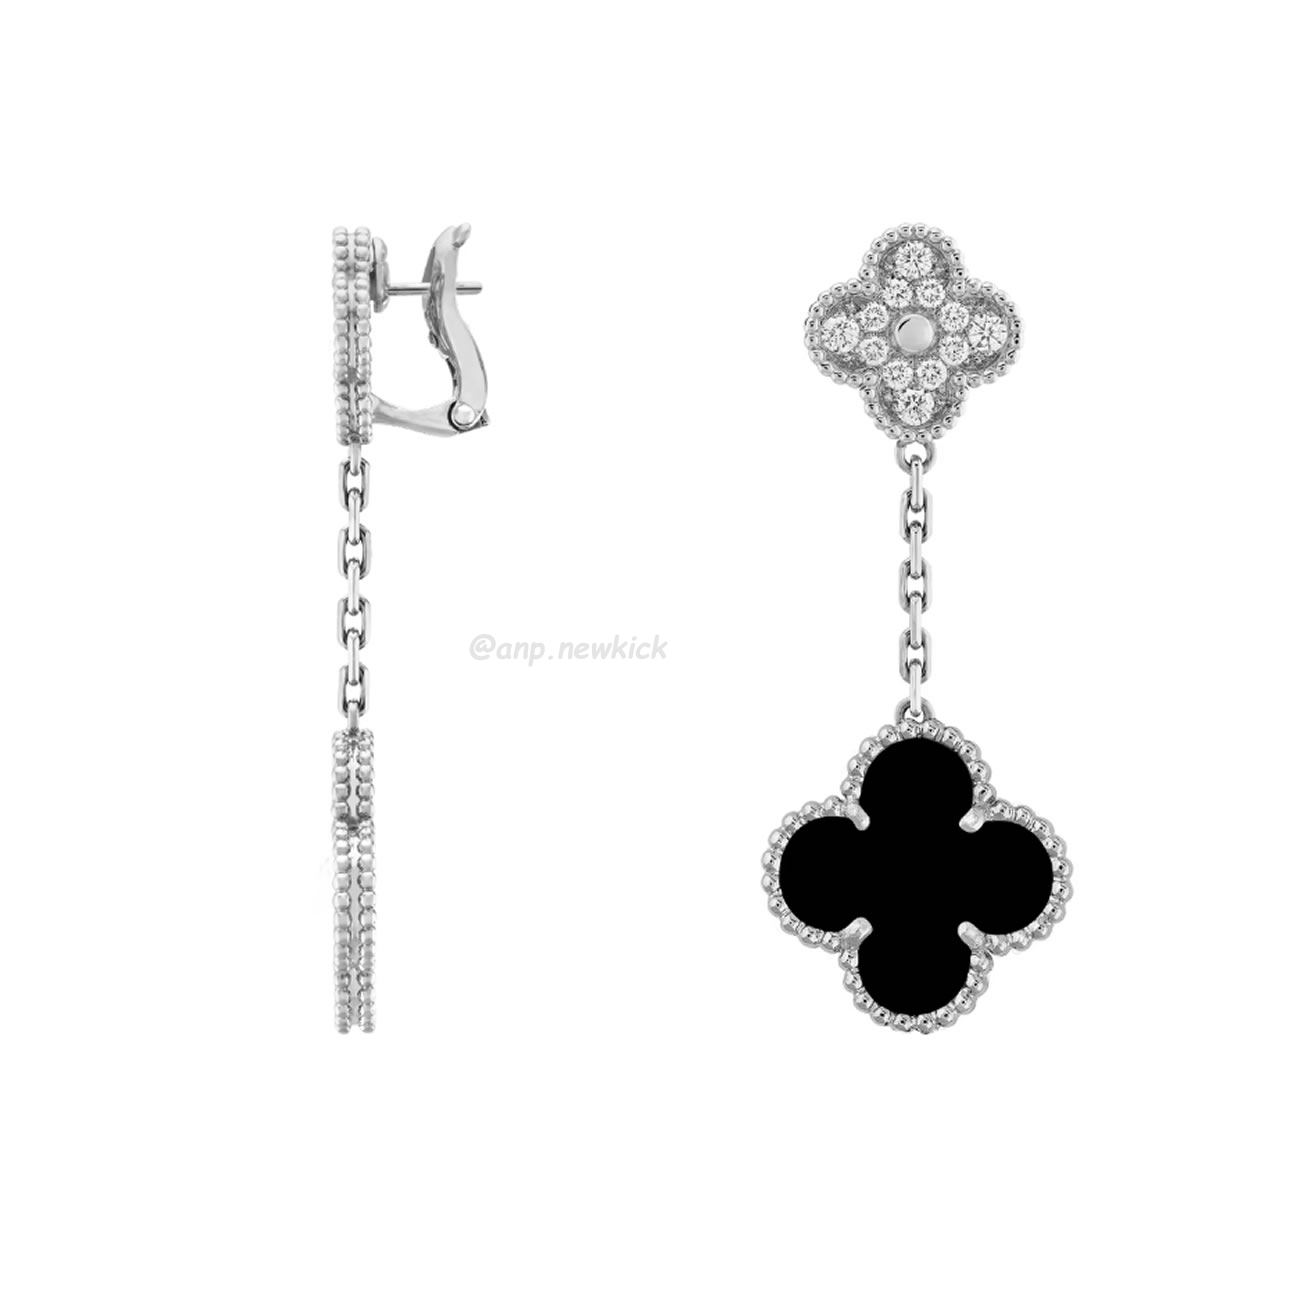 Van Cleef & Arpels Magic Alhambra earrings 2 motifs 18K white gold